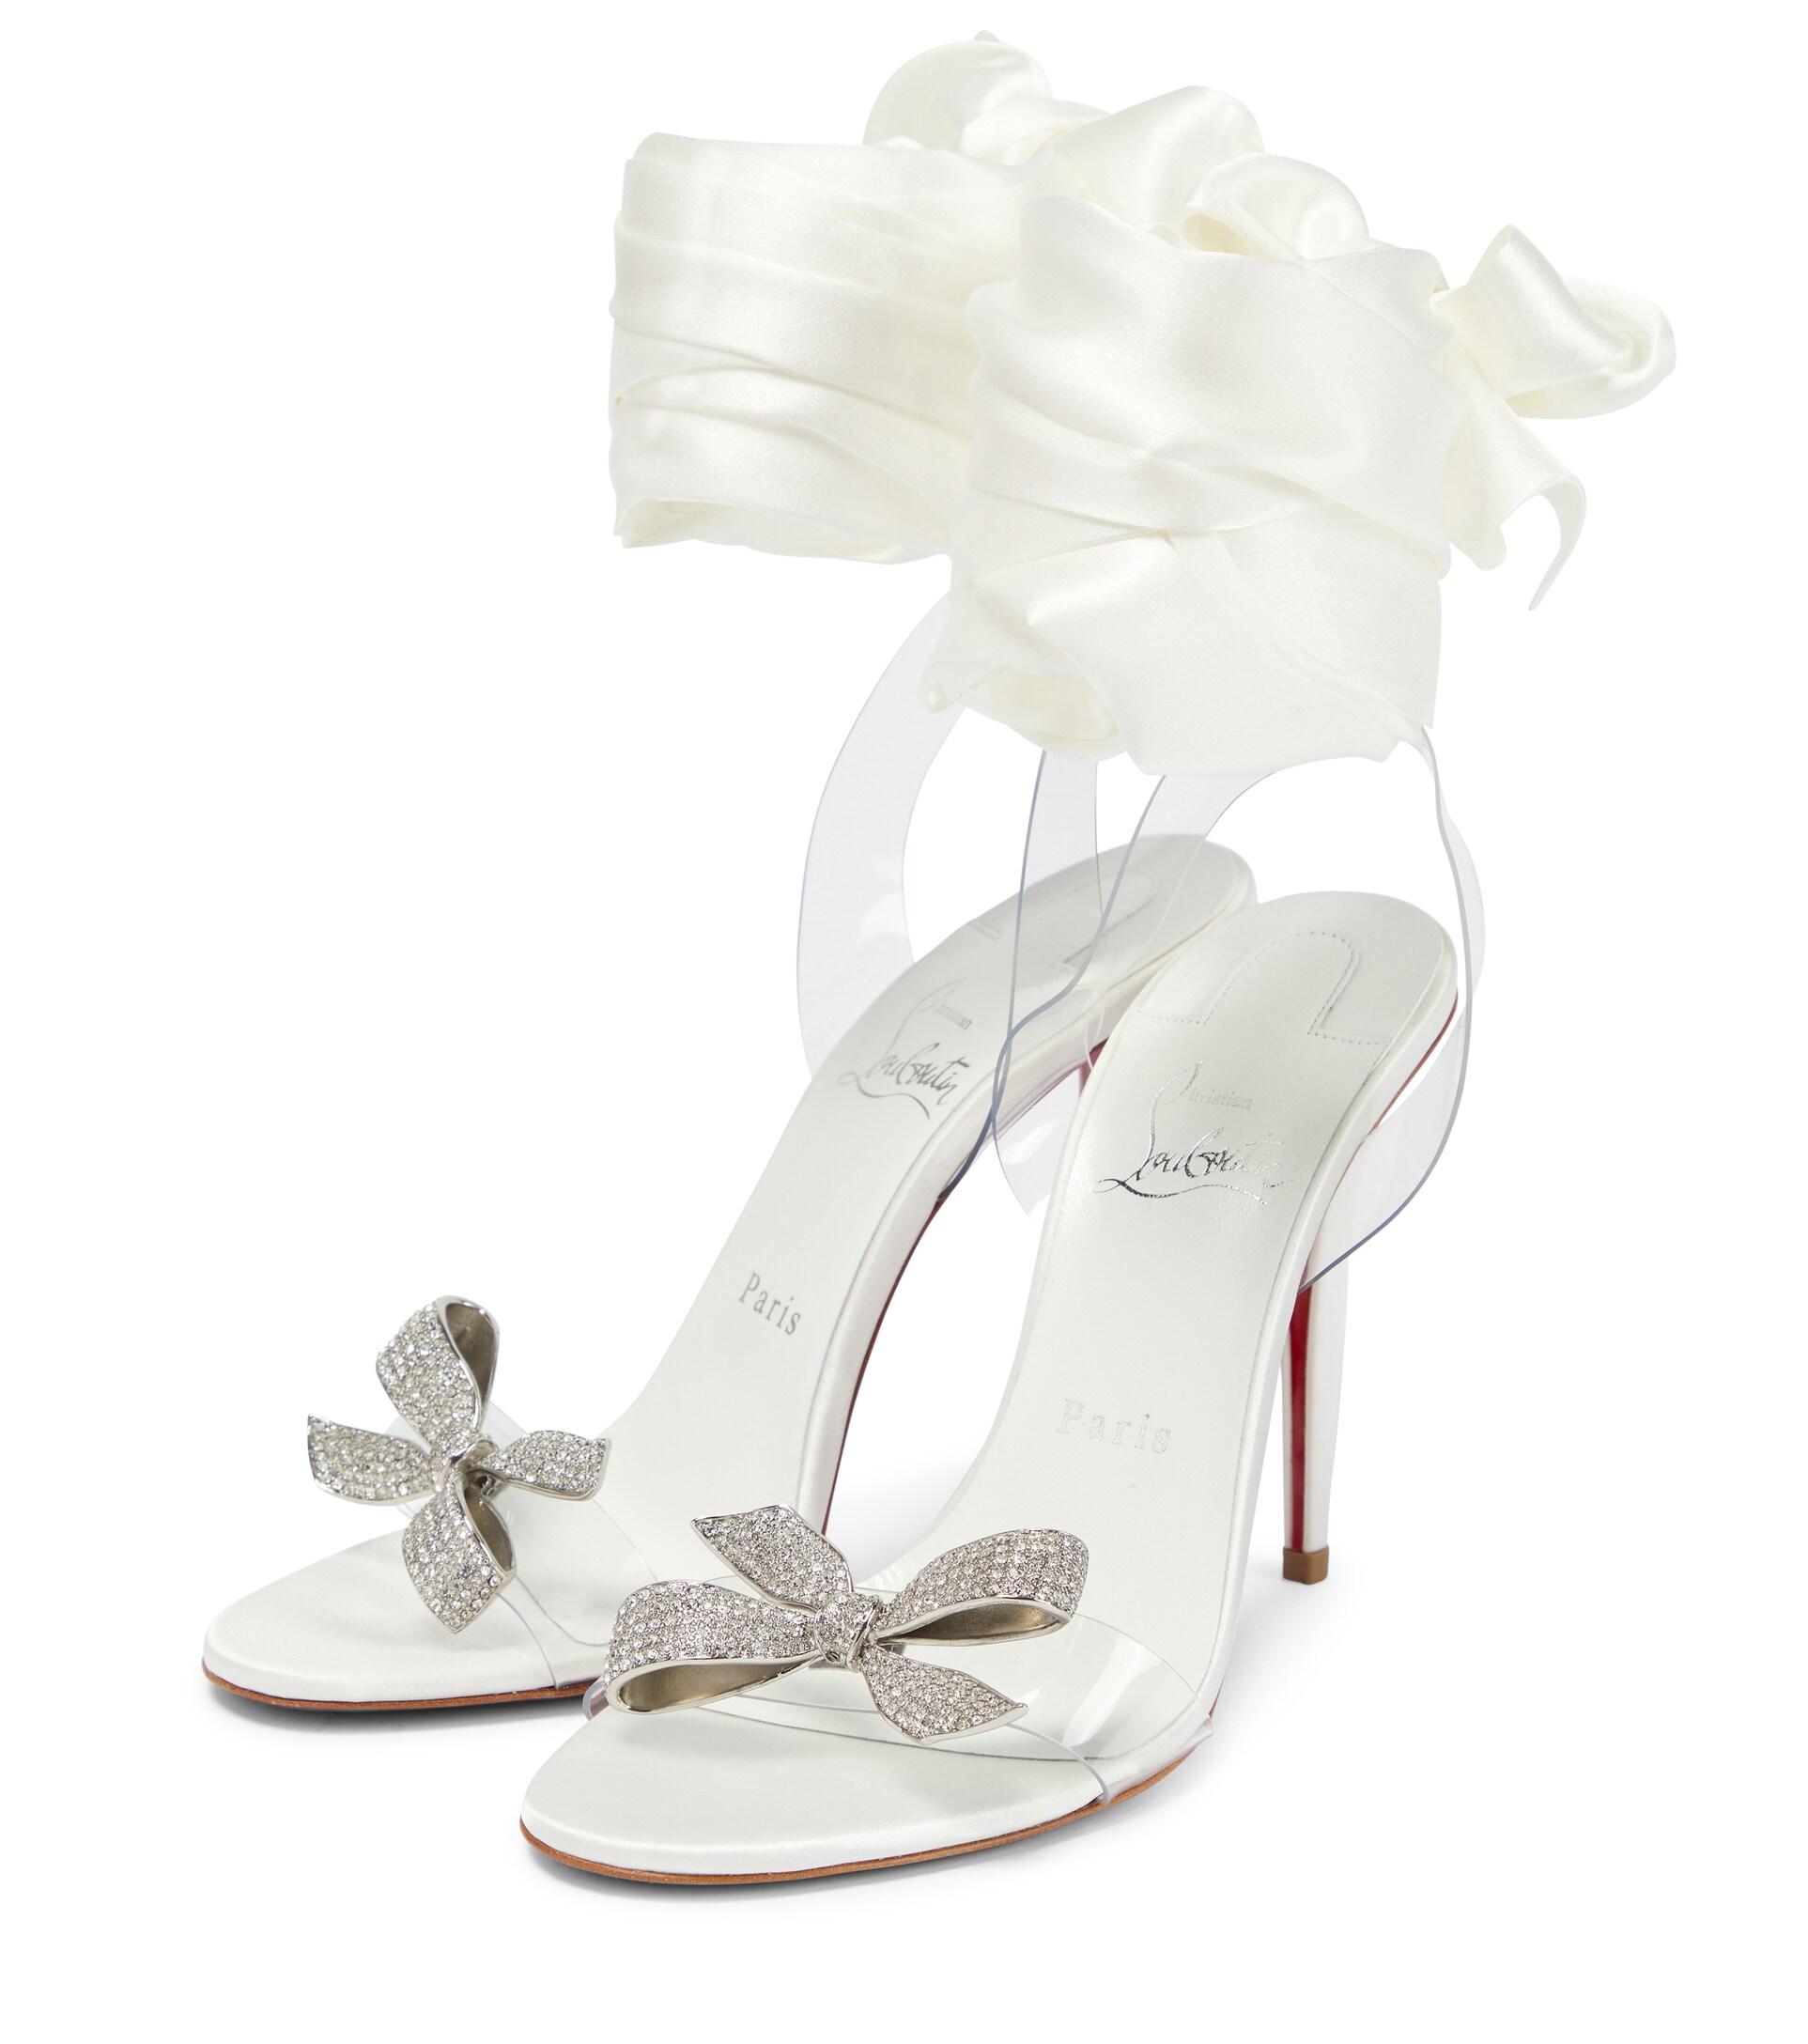 Christian Louboutin Astrinodo Embellished Pvc Sandals in White Lyst